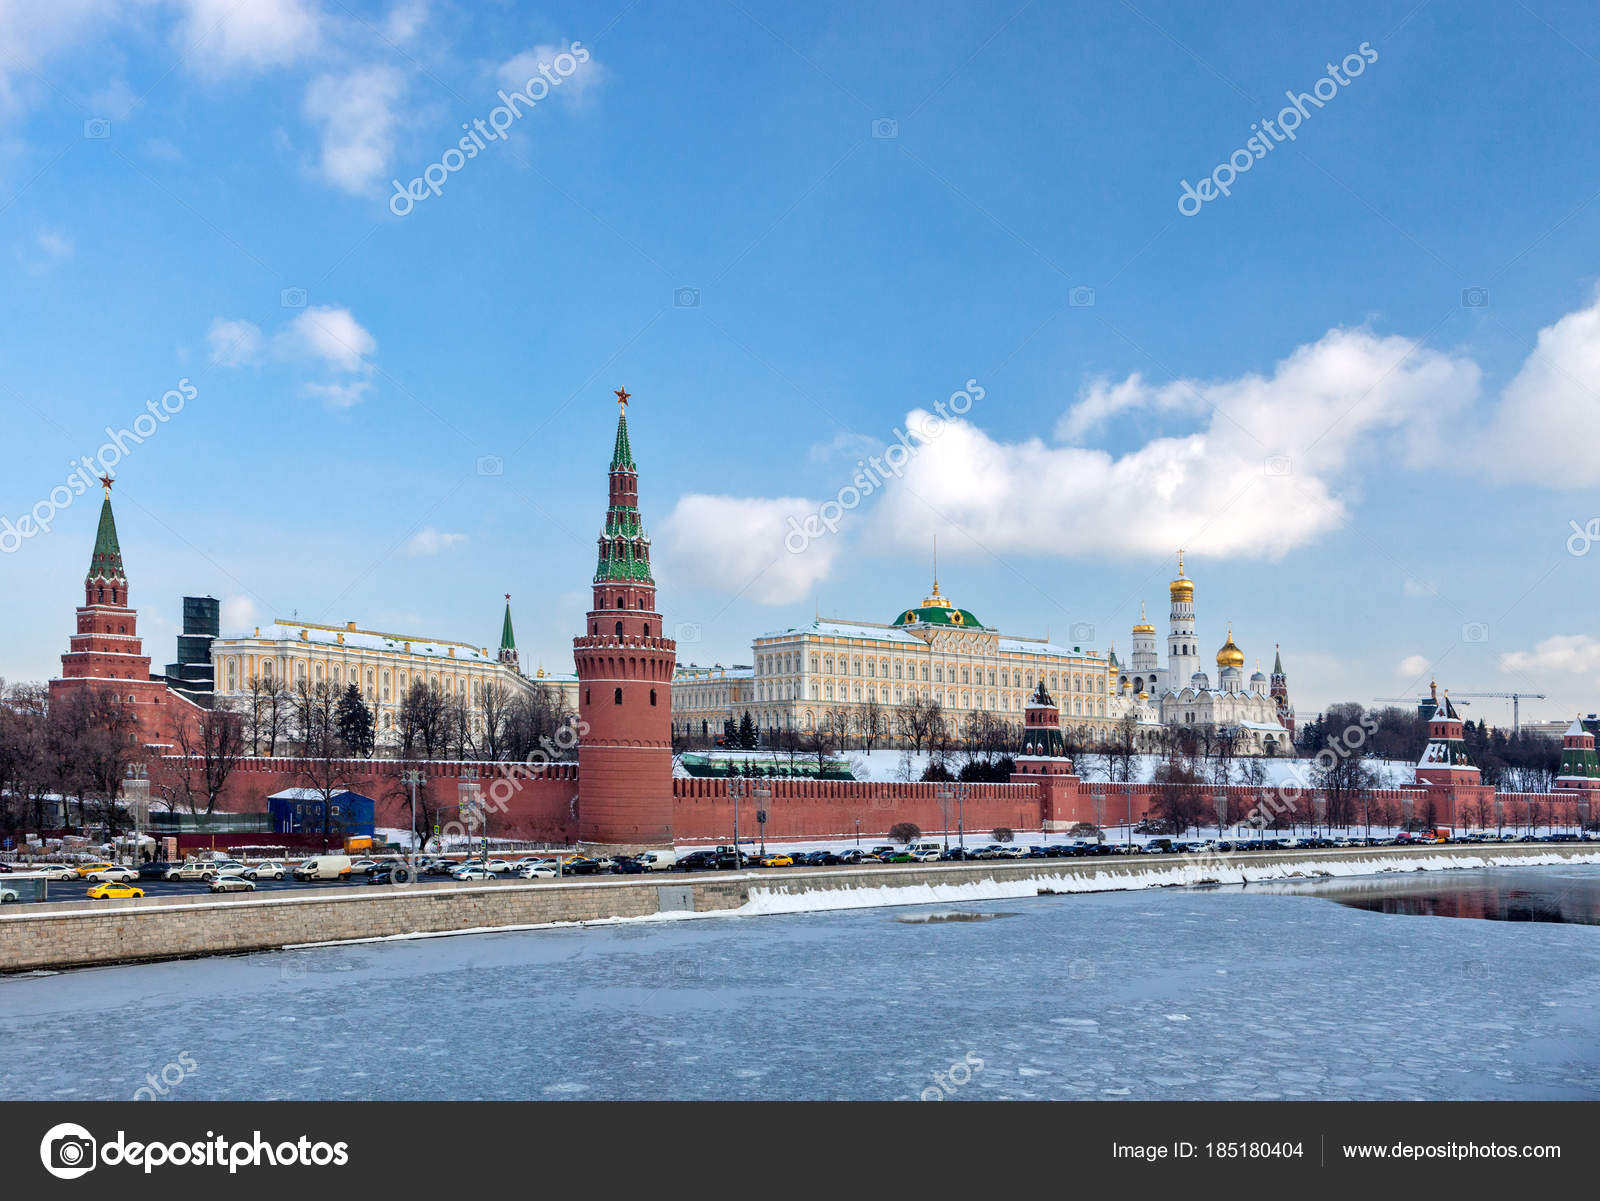 depositphotos_185180404-stock-photo-moscow-russia-february-22-2018.jpg